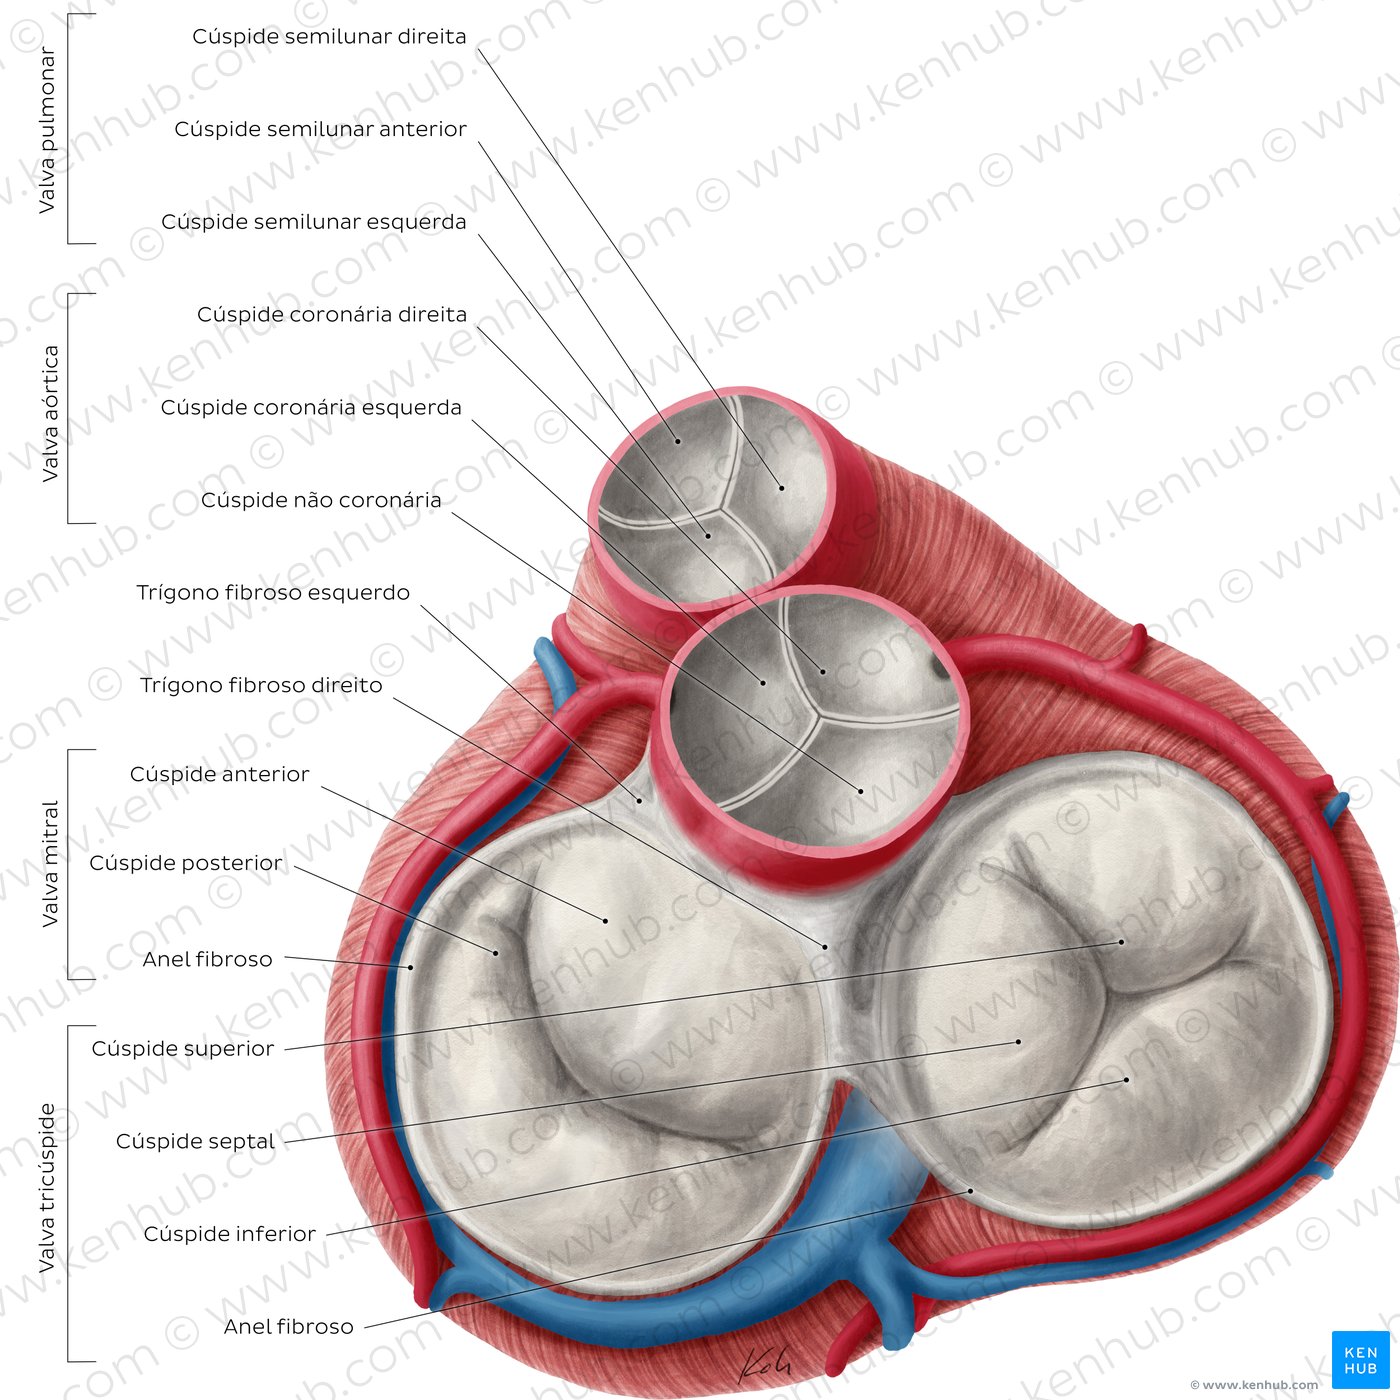 Válvulas cardíacas - vista cranial